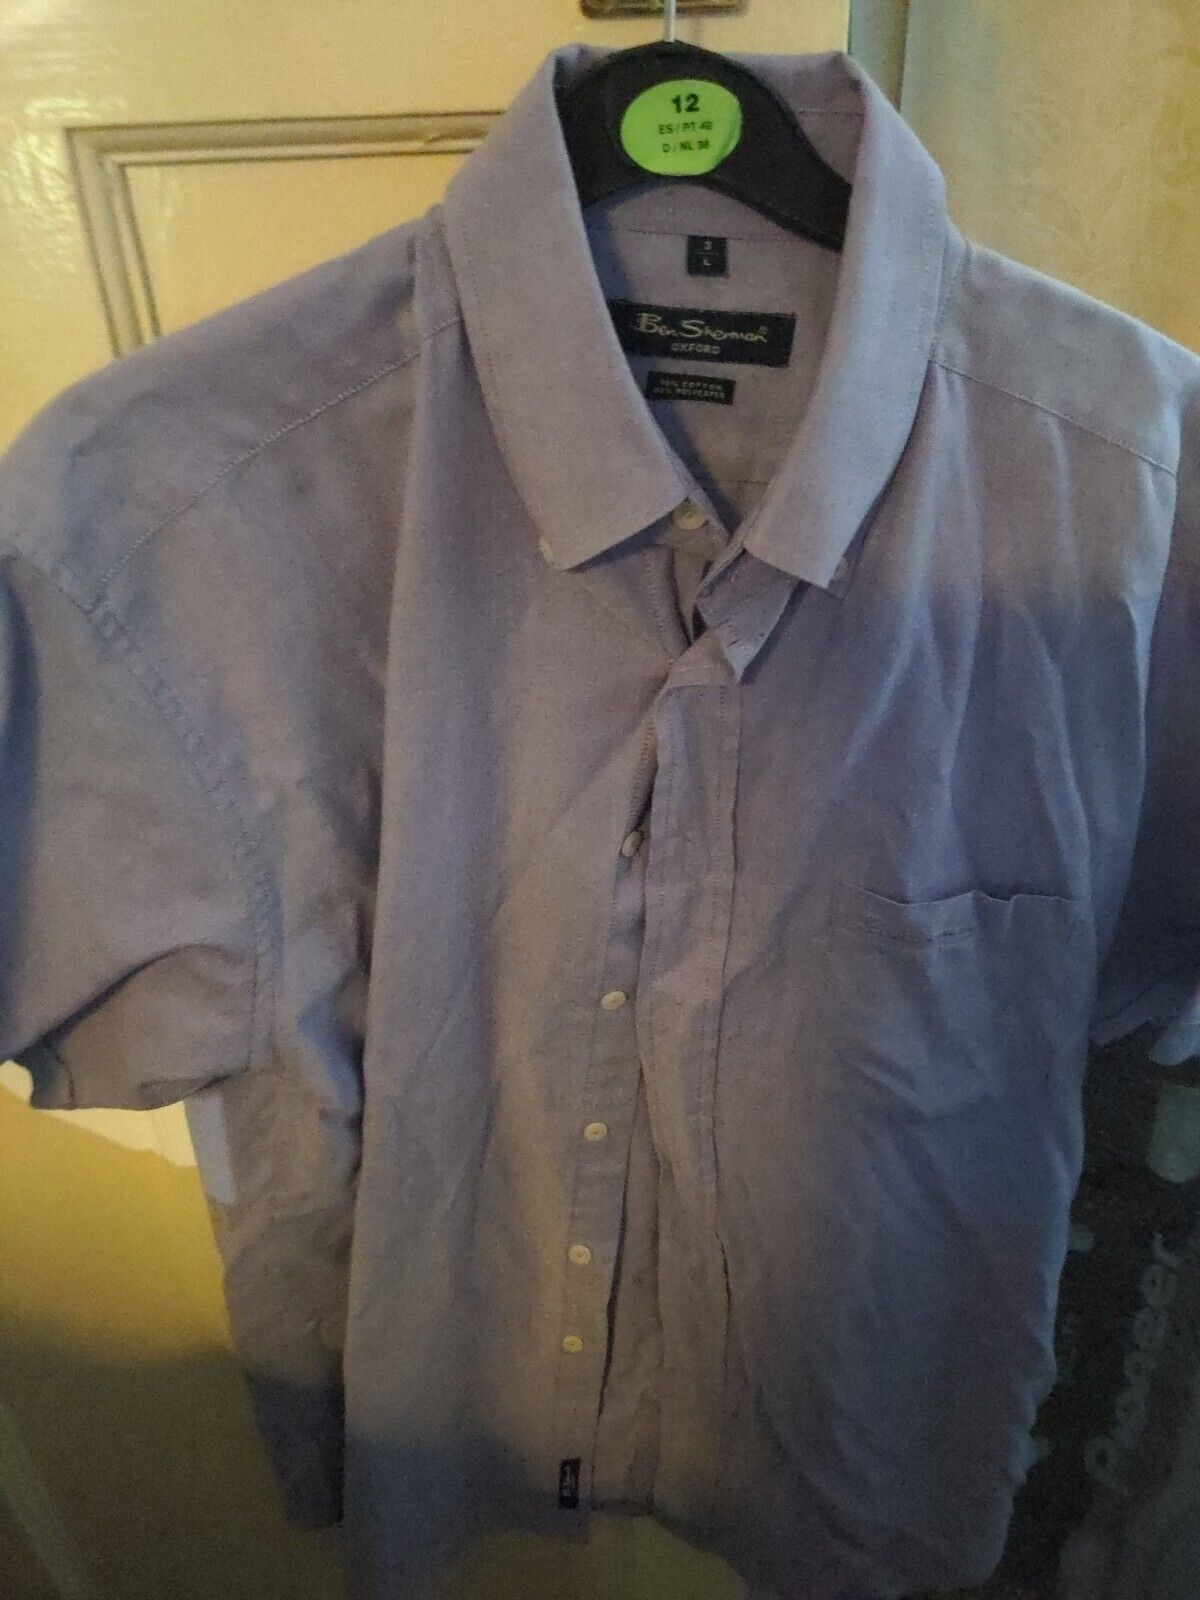 Ben Sherman Short Sleeve Shirt Large | eBay